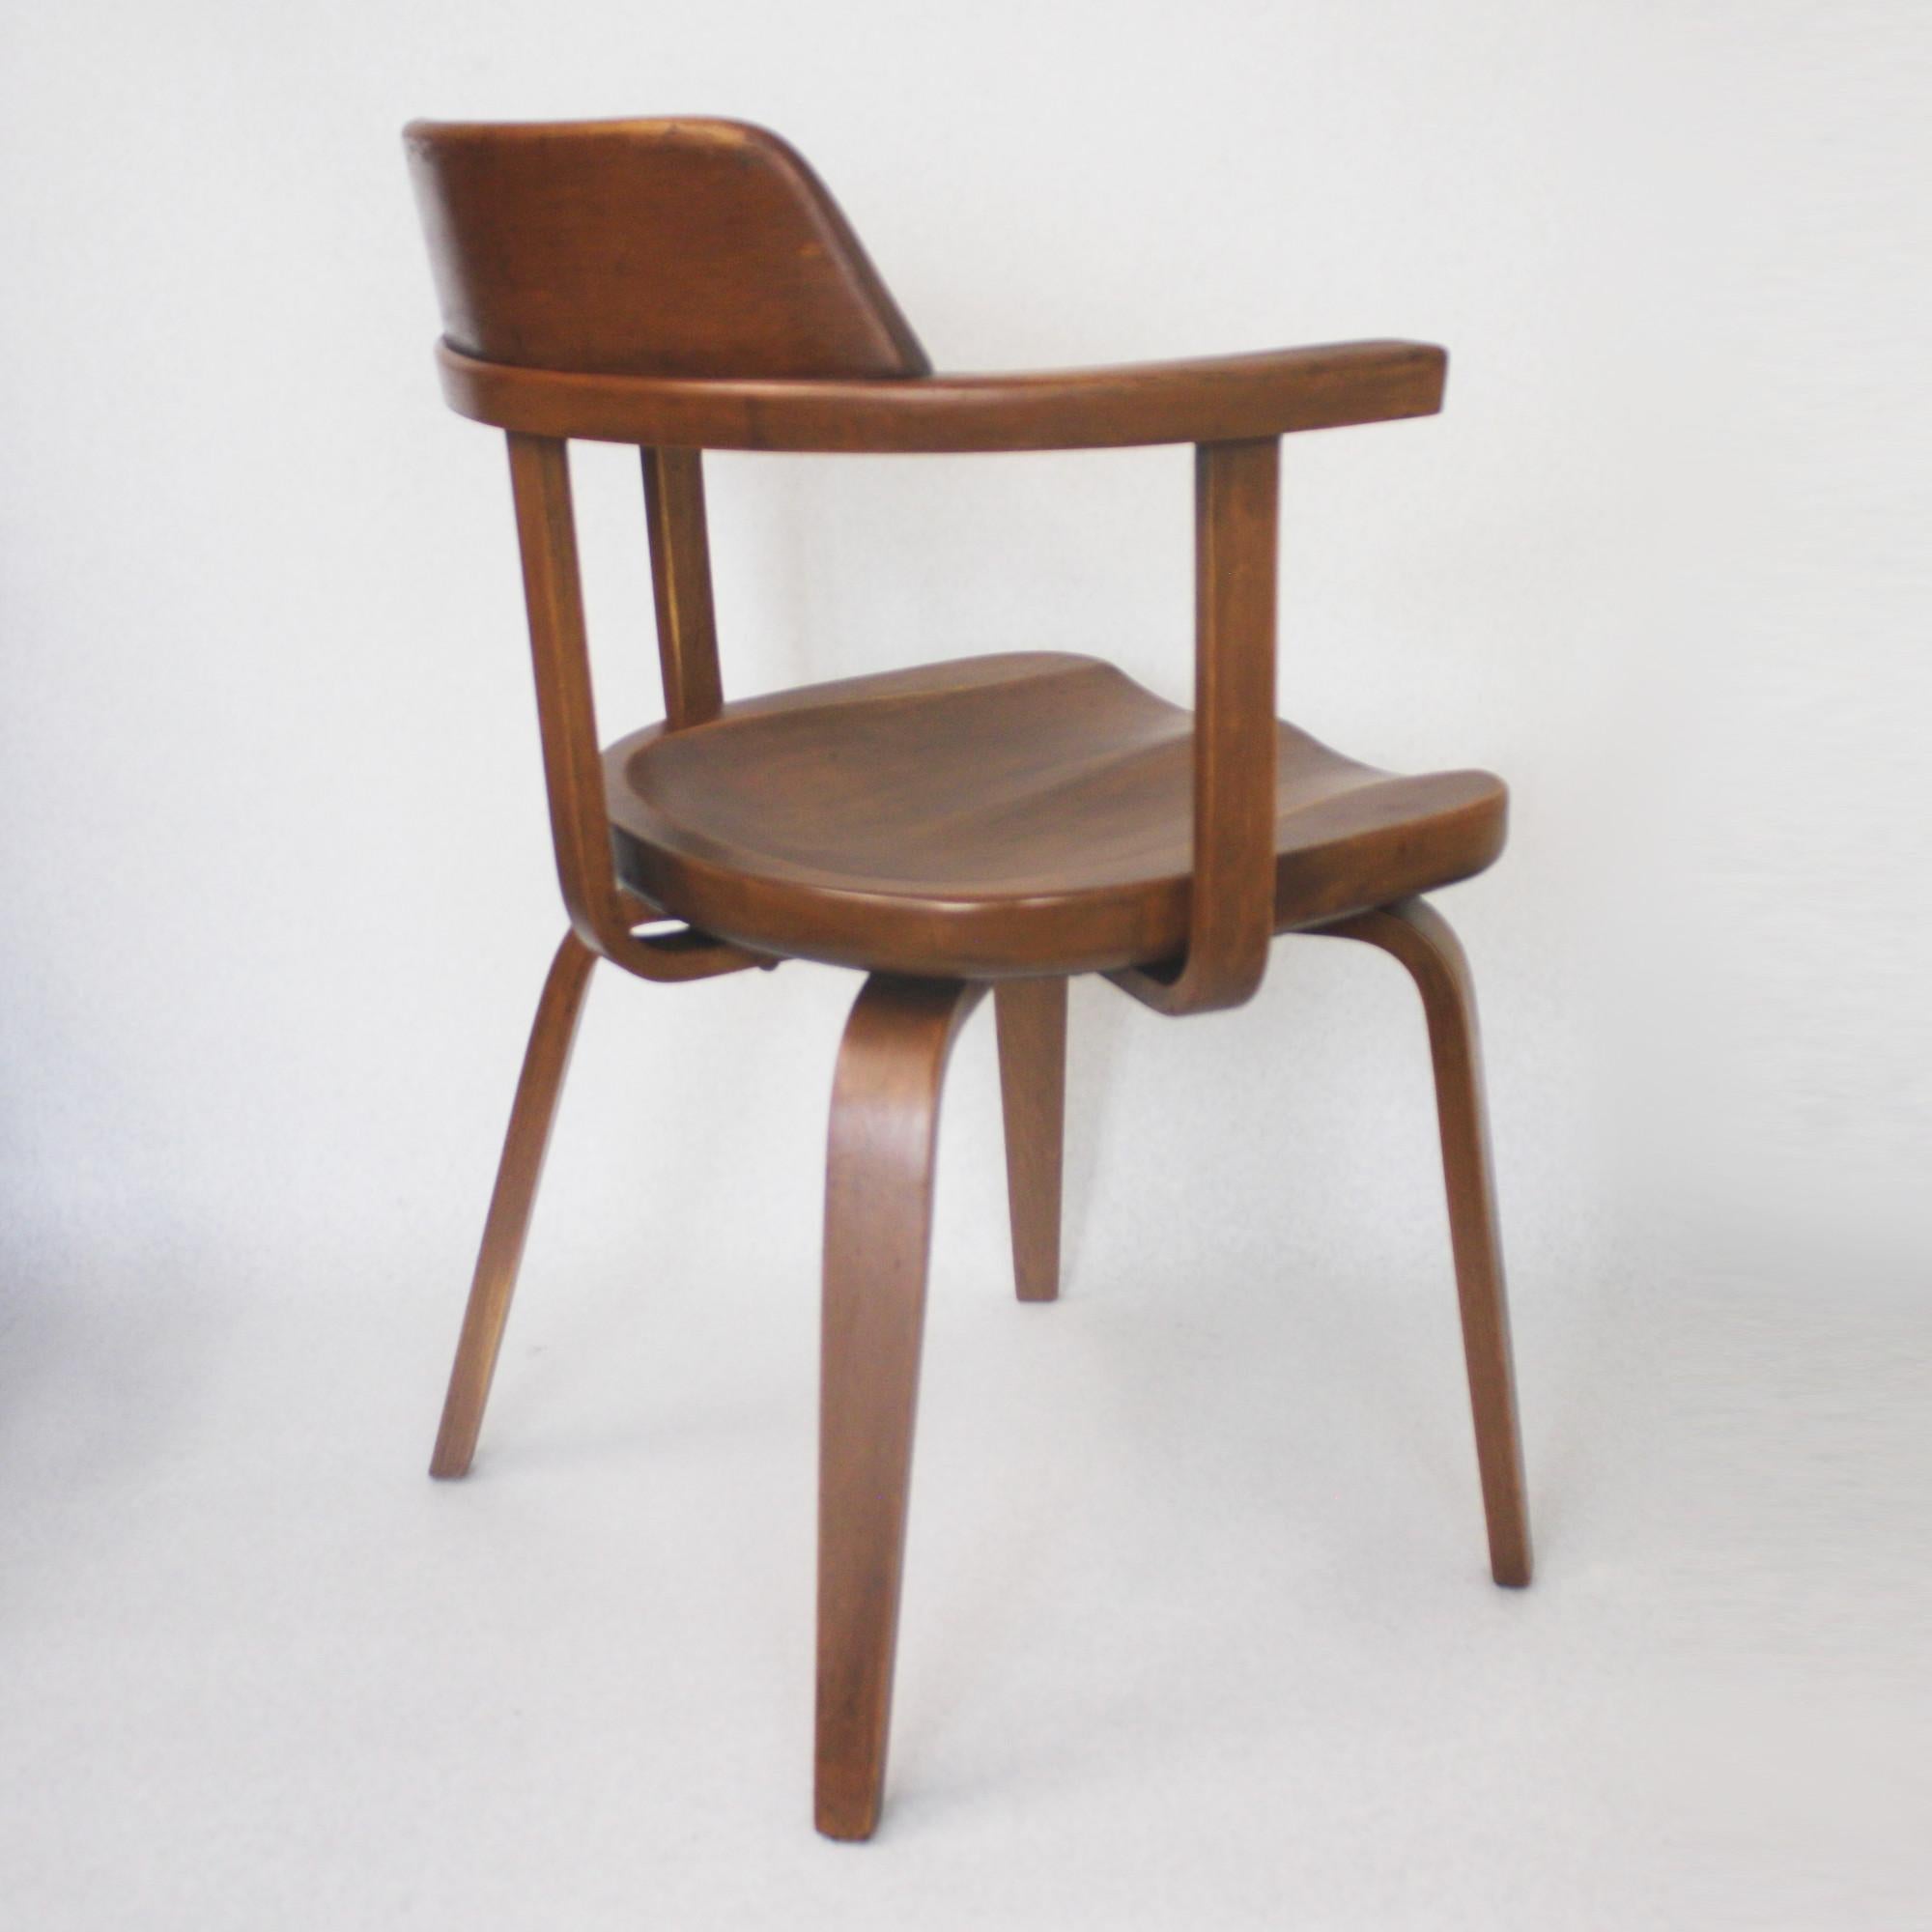 Laminated Rare Mid-Century Modern W199 Chair Designed by Walter Gropius for Thonet Bauhaus